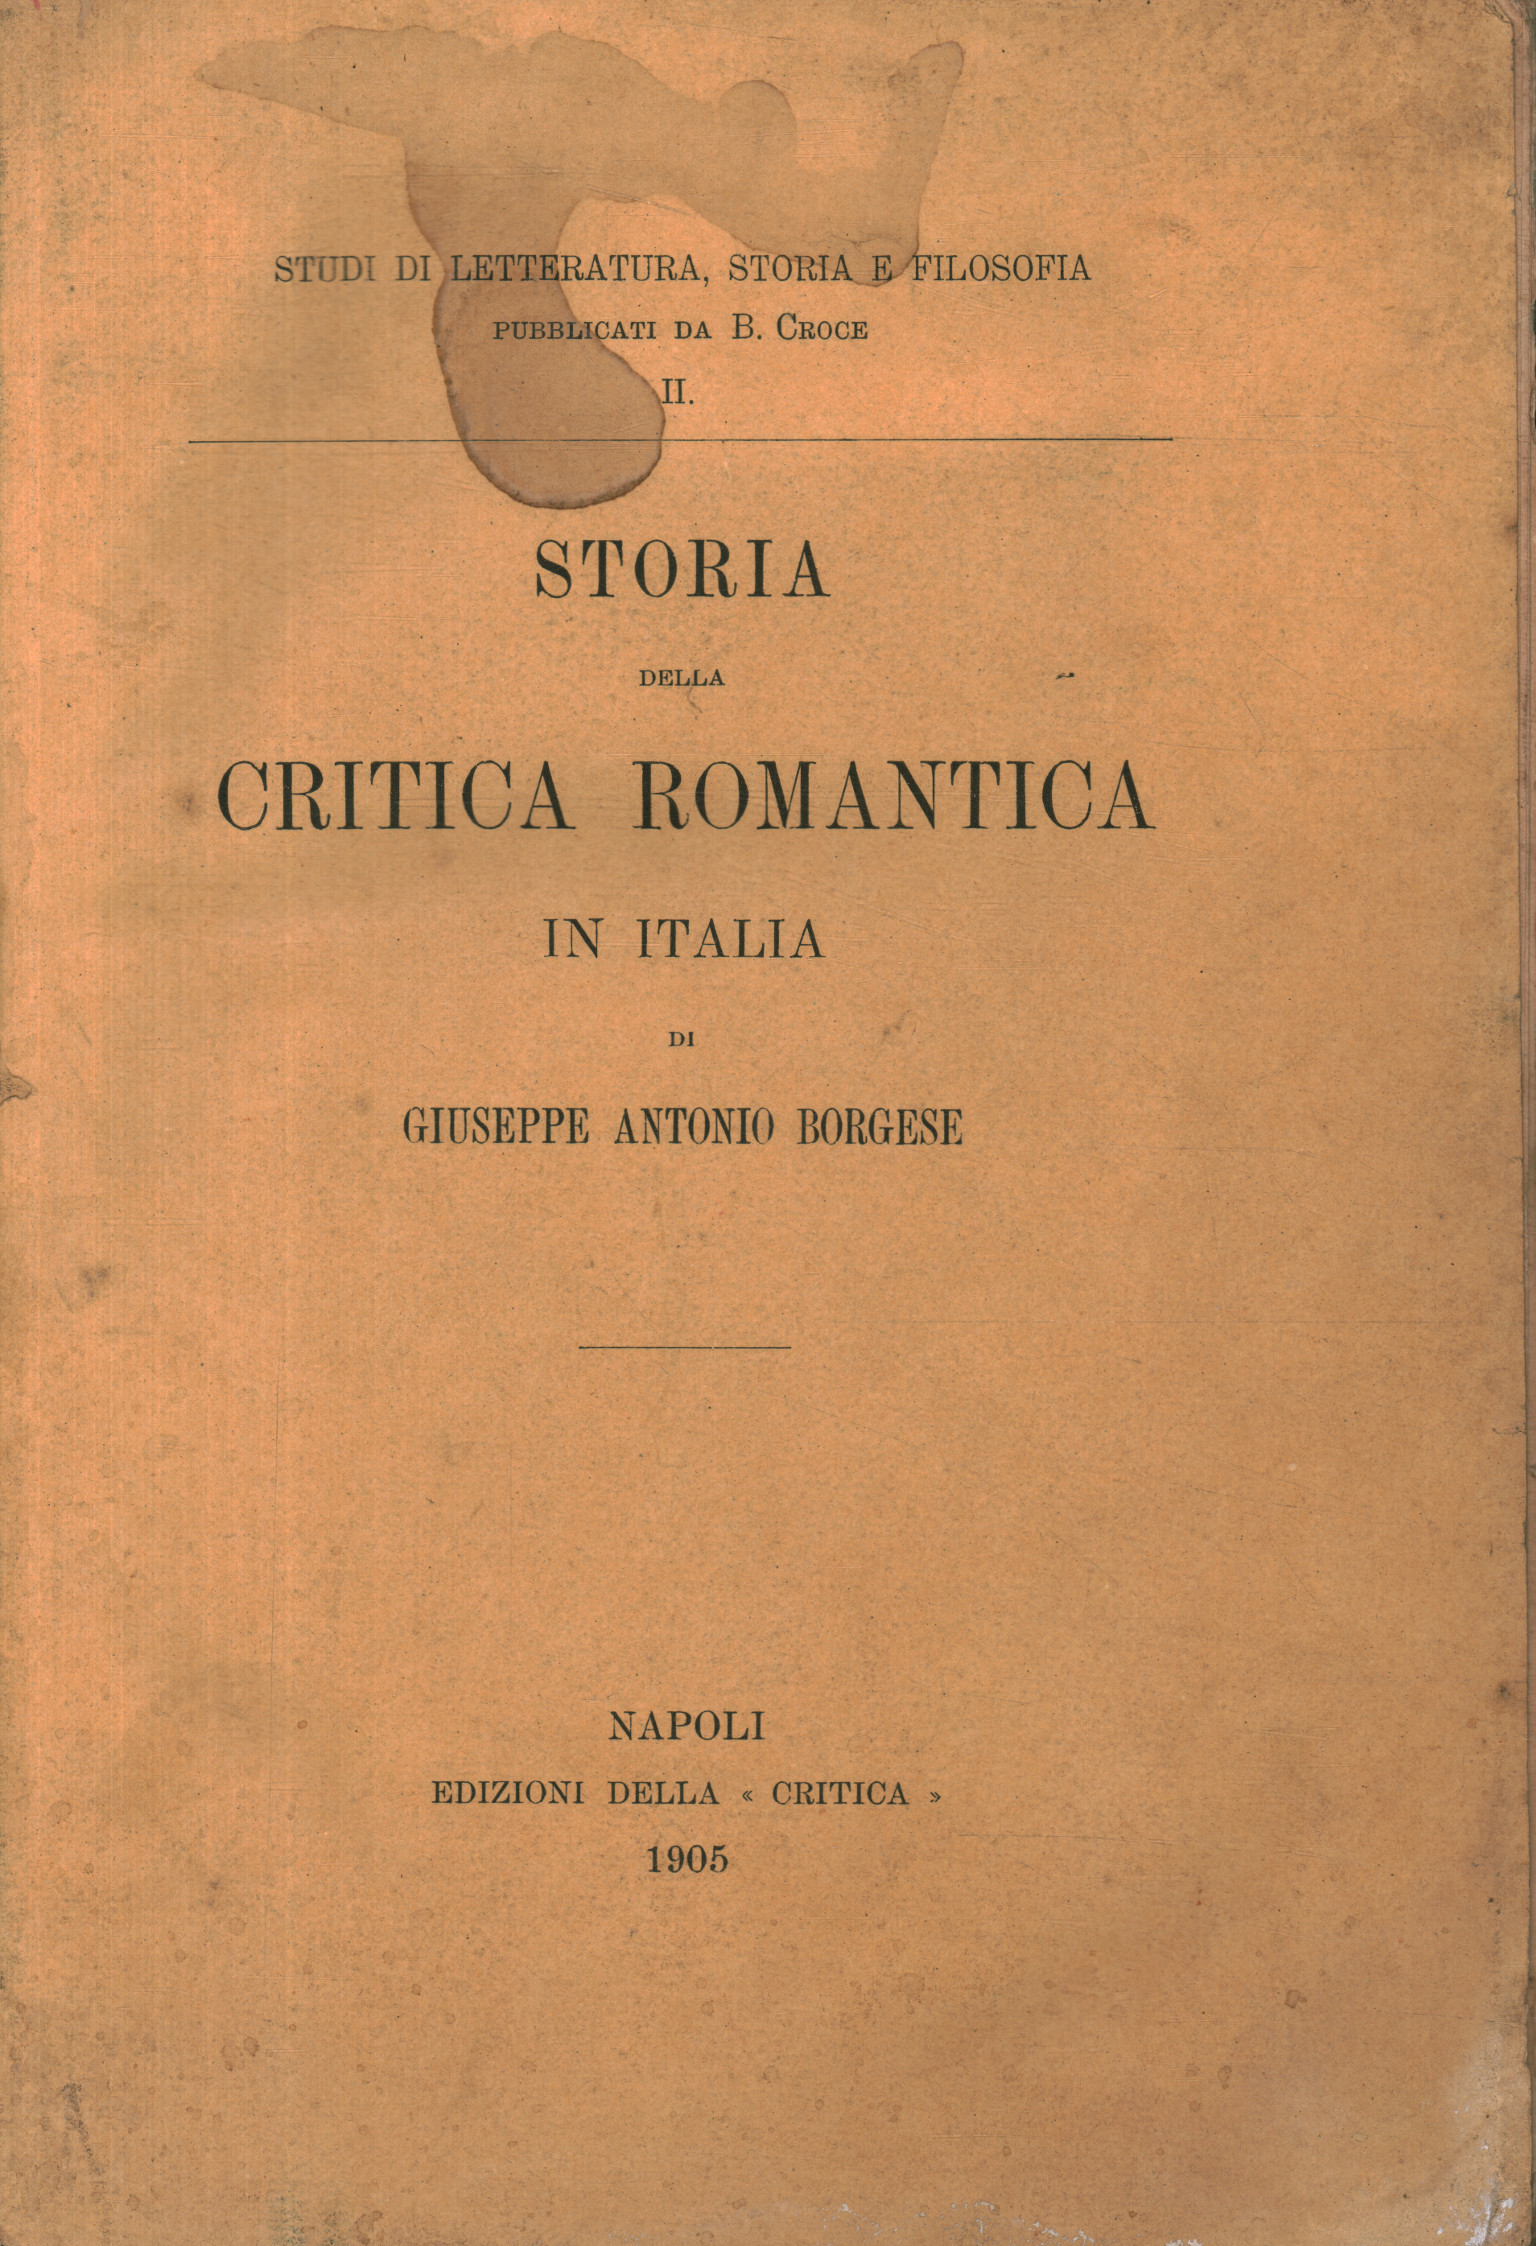 Geschichte der Romantikkritik in Italien